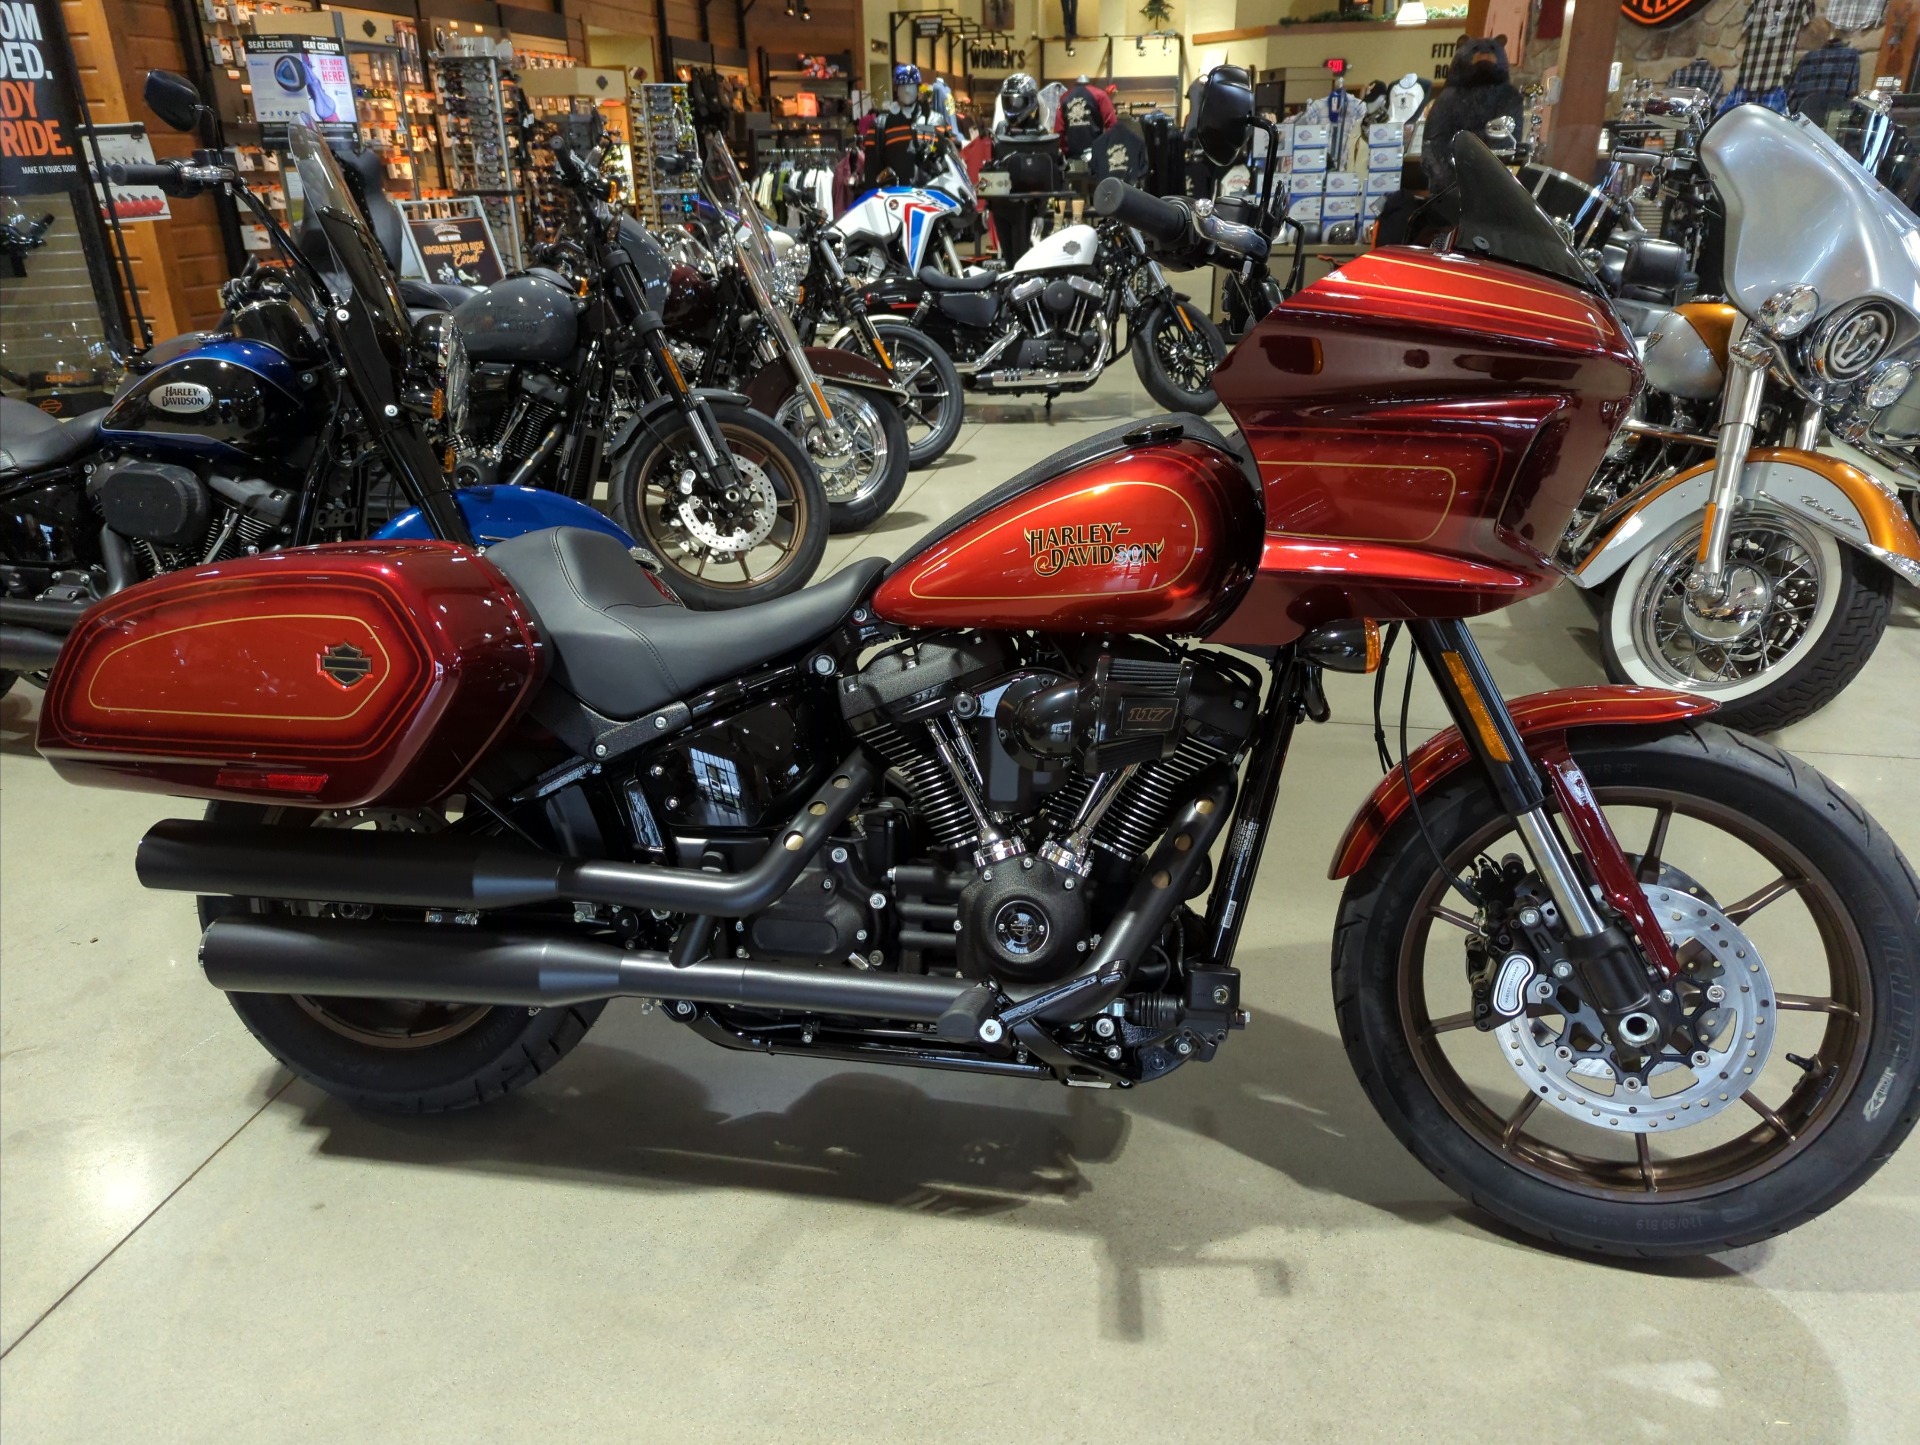 2022 Harley-Davidson Low Rider® El Diablo in Broadalbin, New York - Photo 1